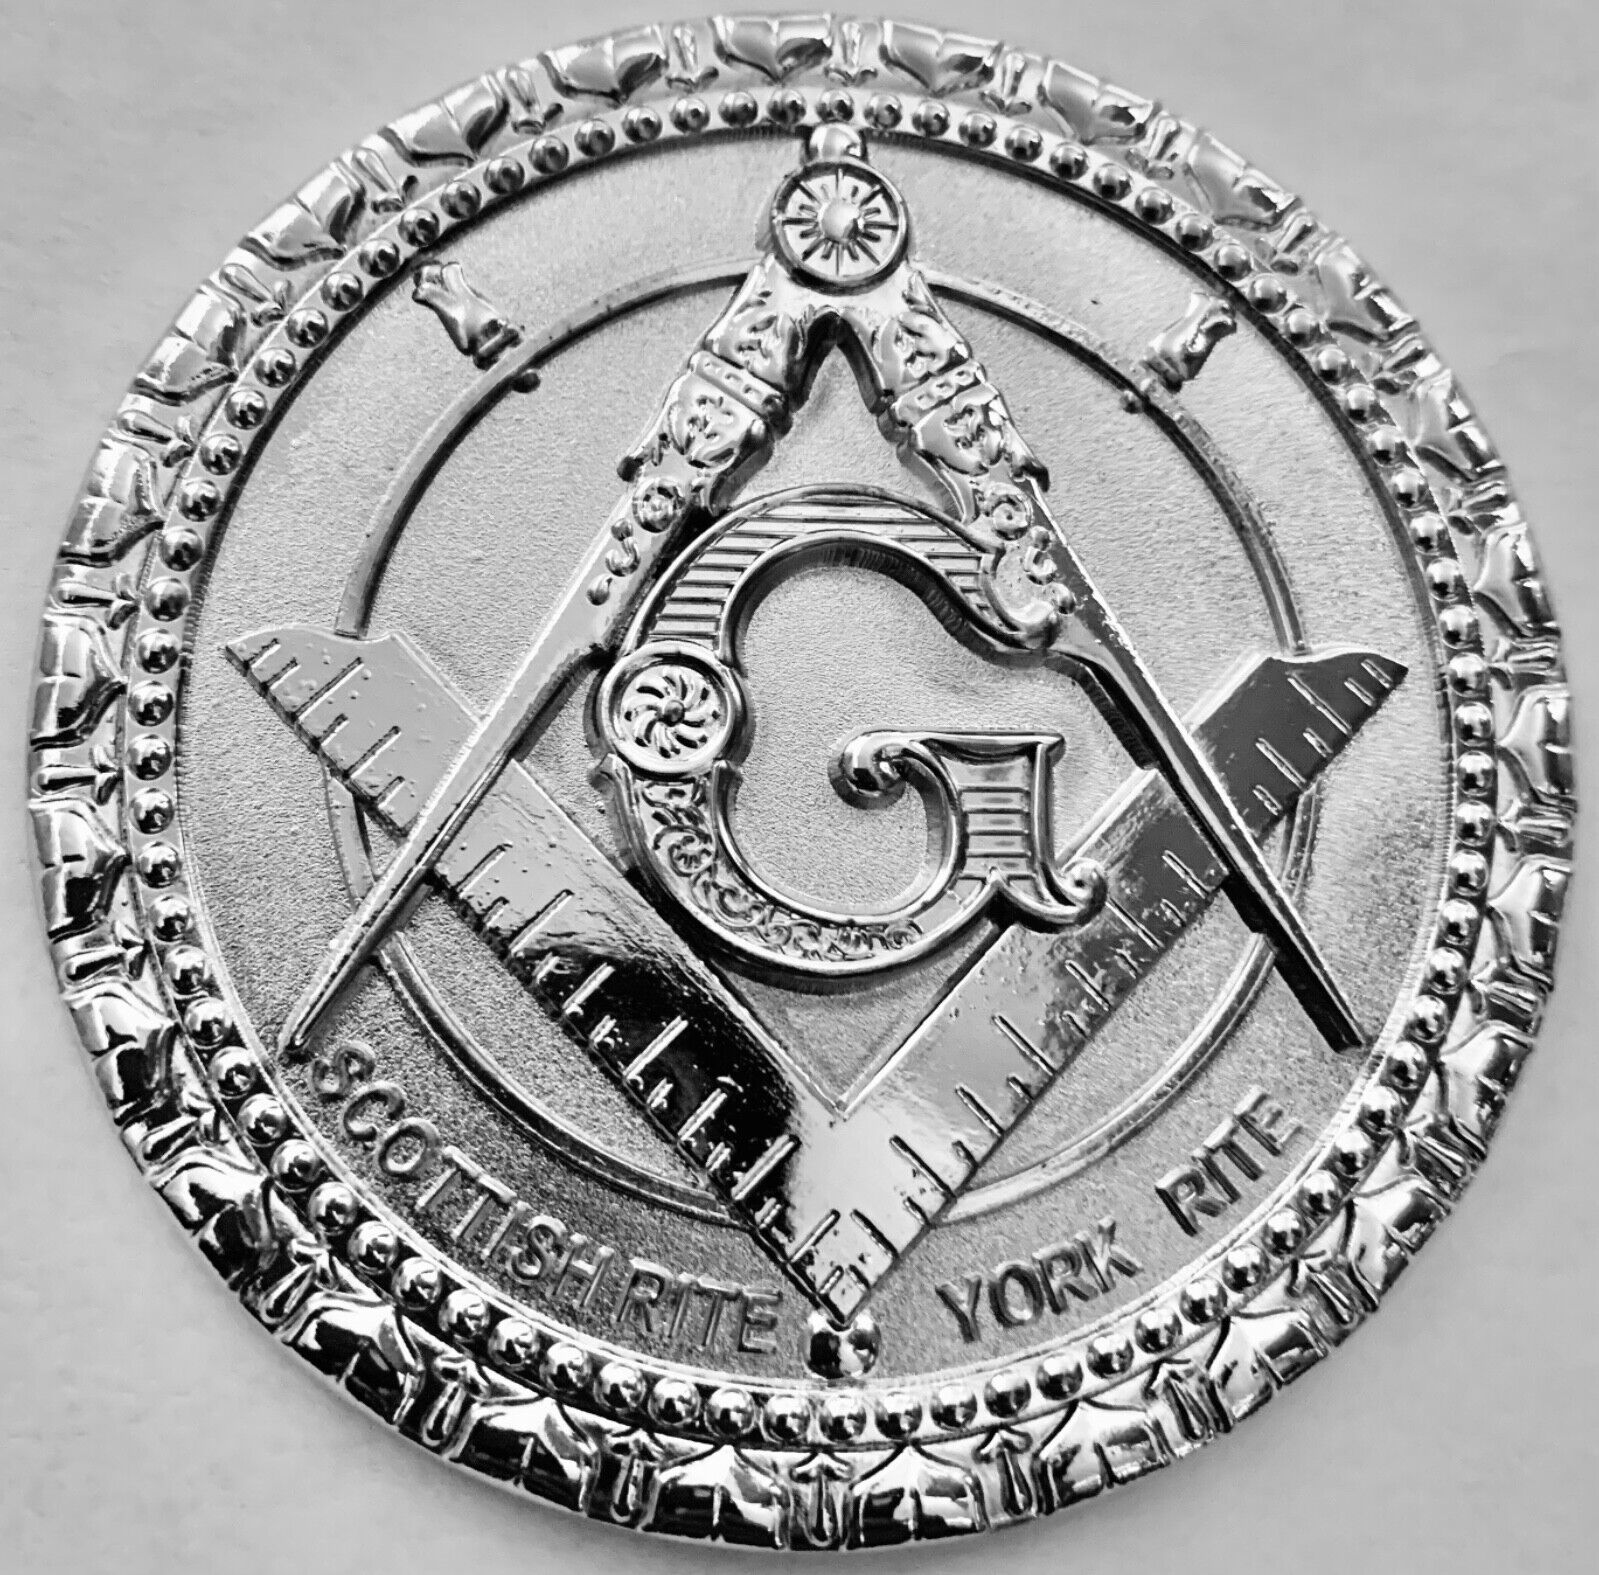 Freemason Masonic Heavy duty all chrome metal auto tag car truck Emblem